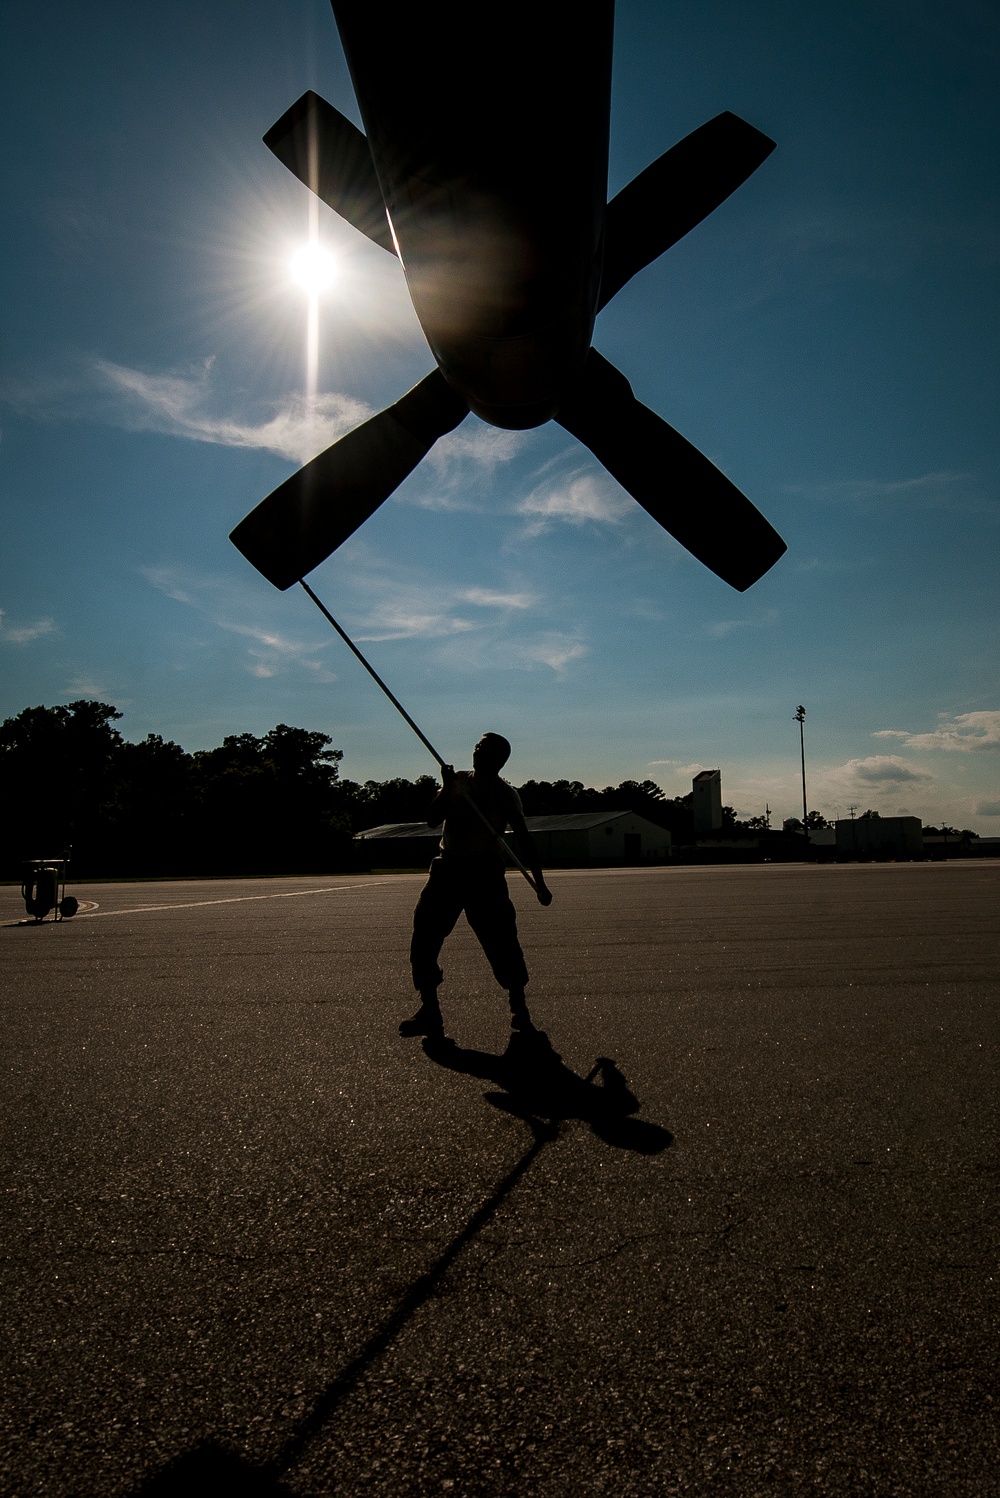 C-130 sprays away mosquitoes